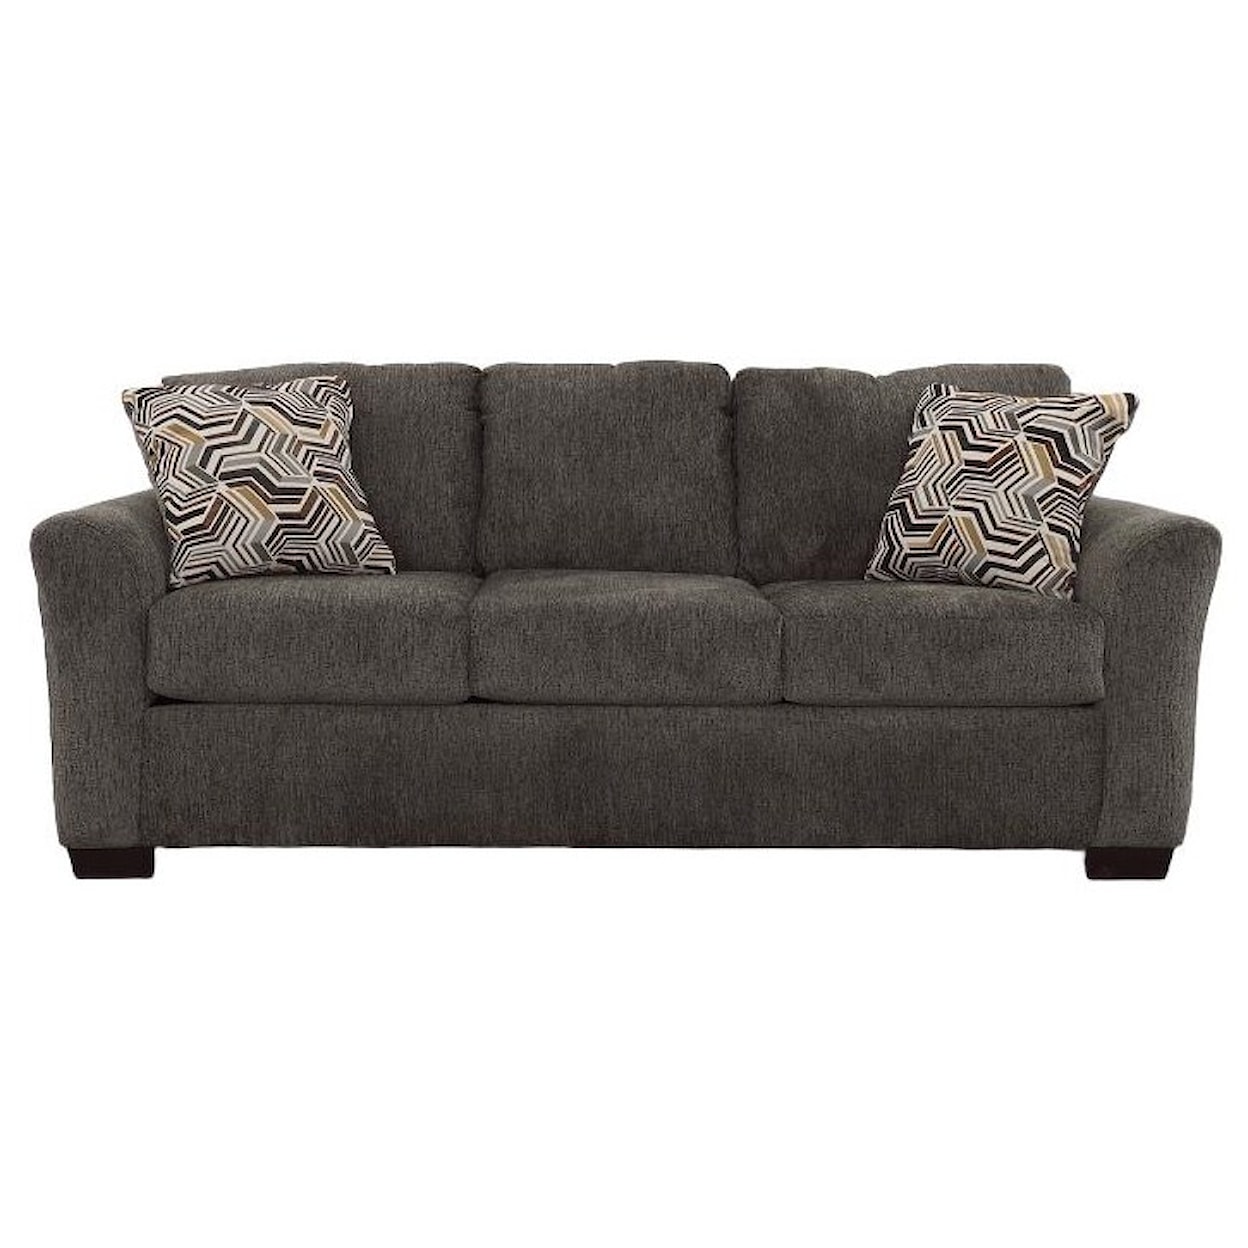 Affordable Furniture 3333 3333 Grey Sofa